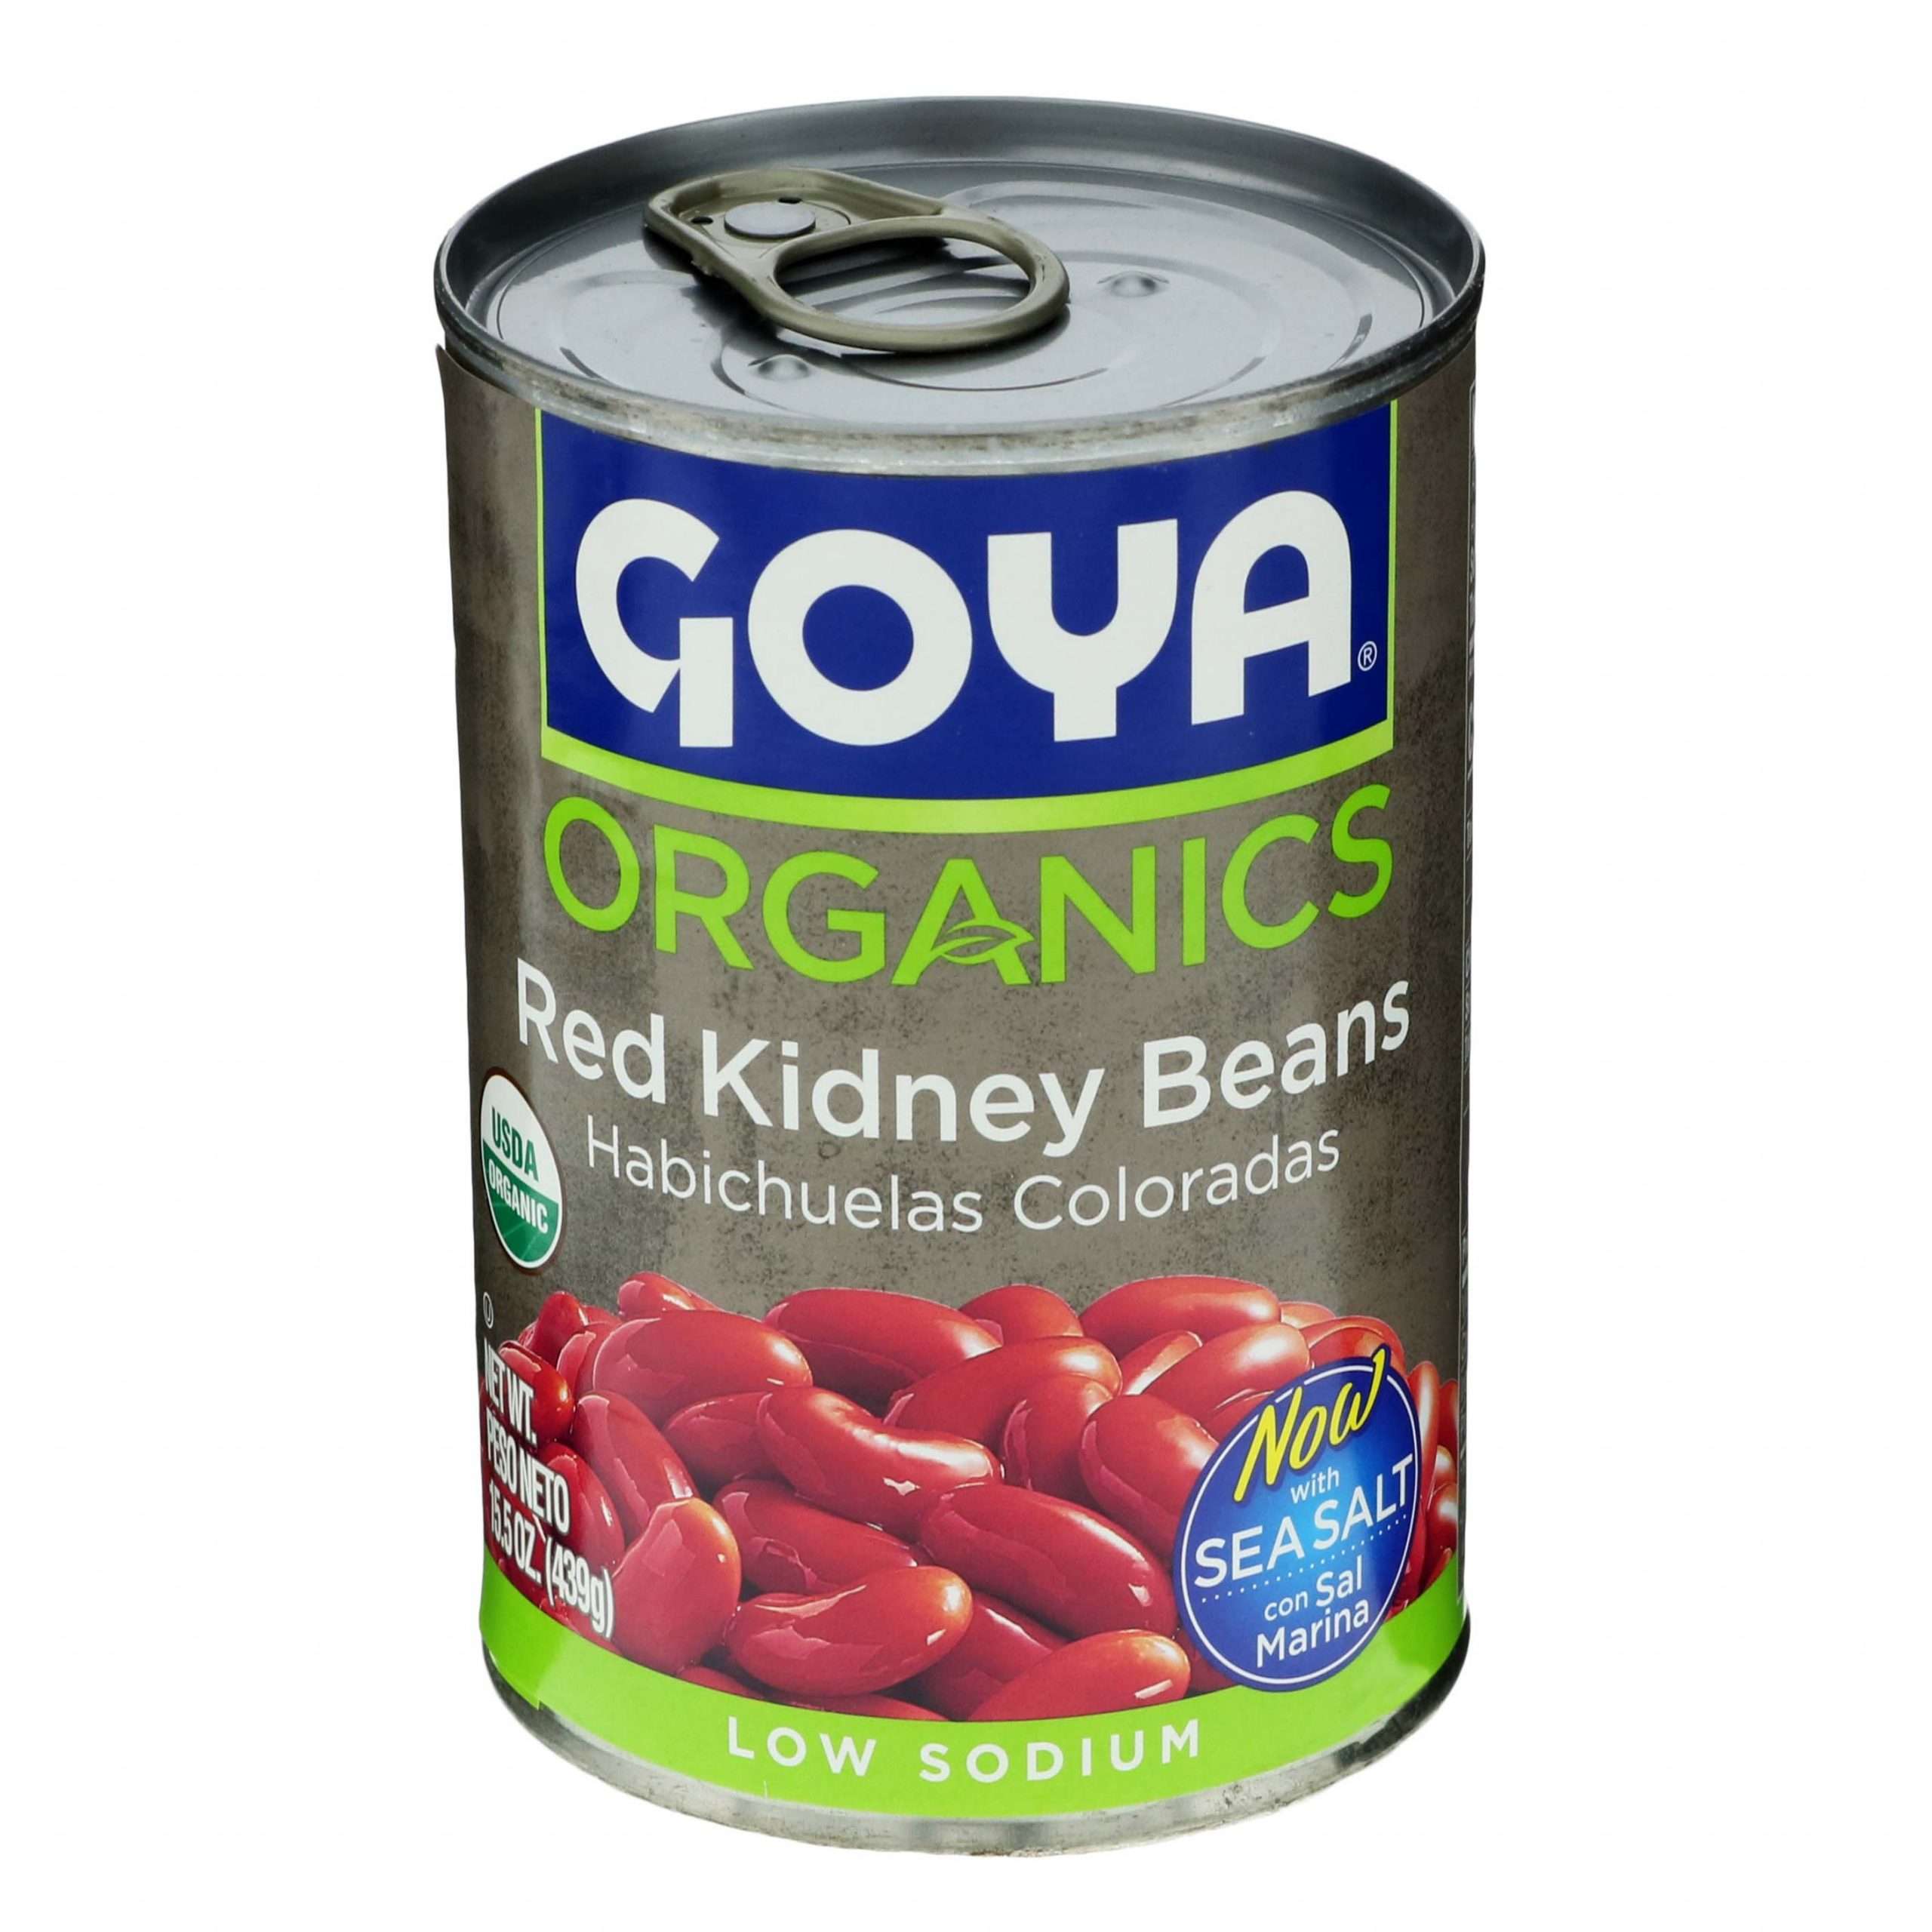 Goya Organics Red Kidney Beans